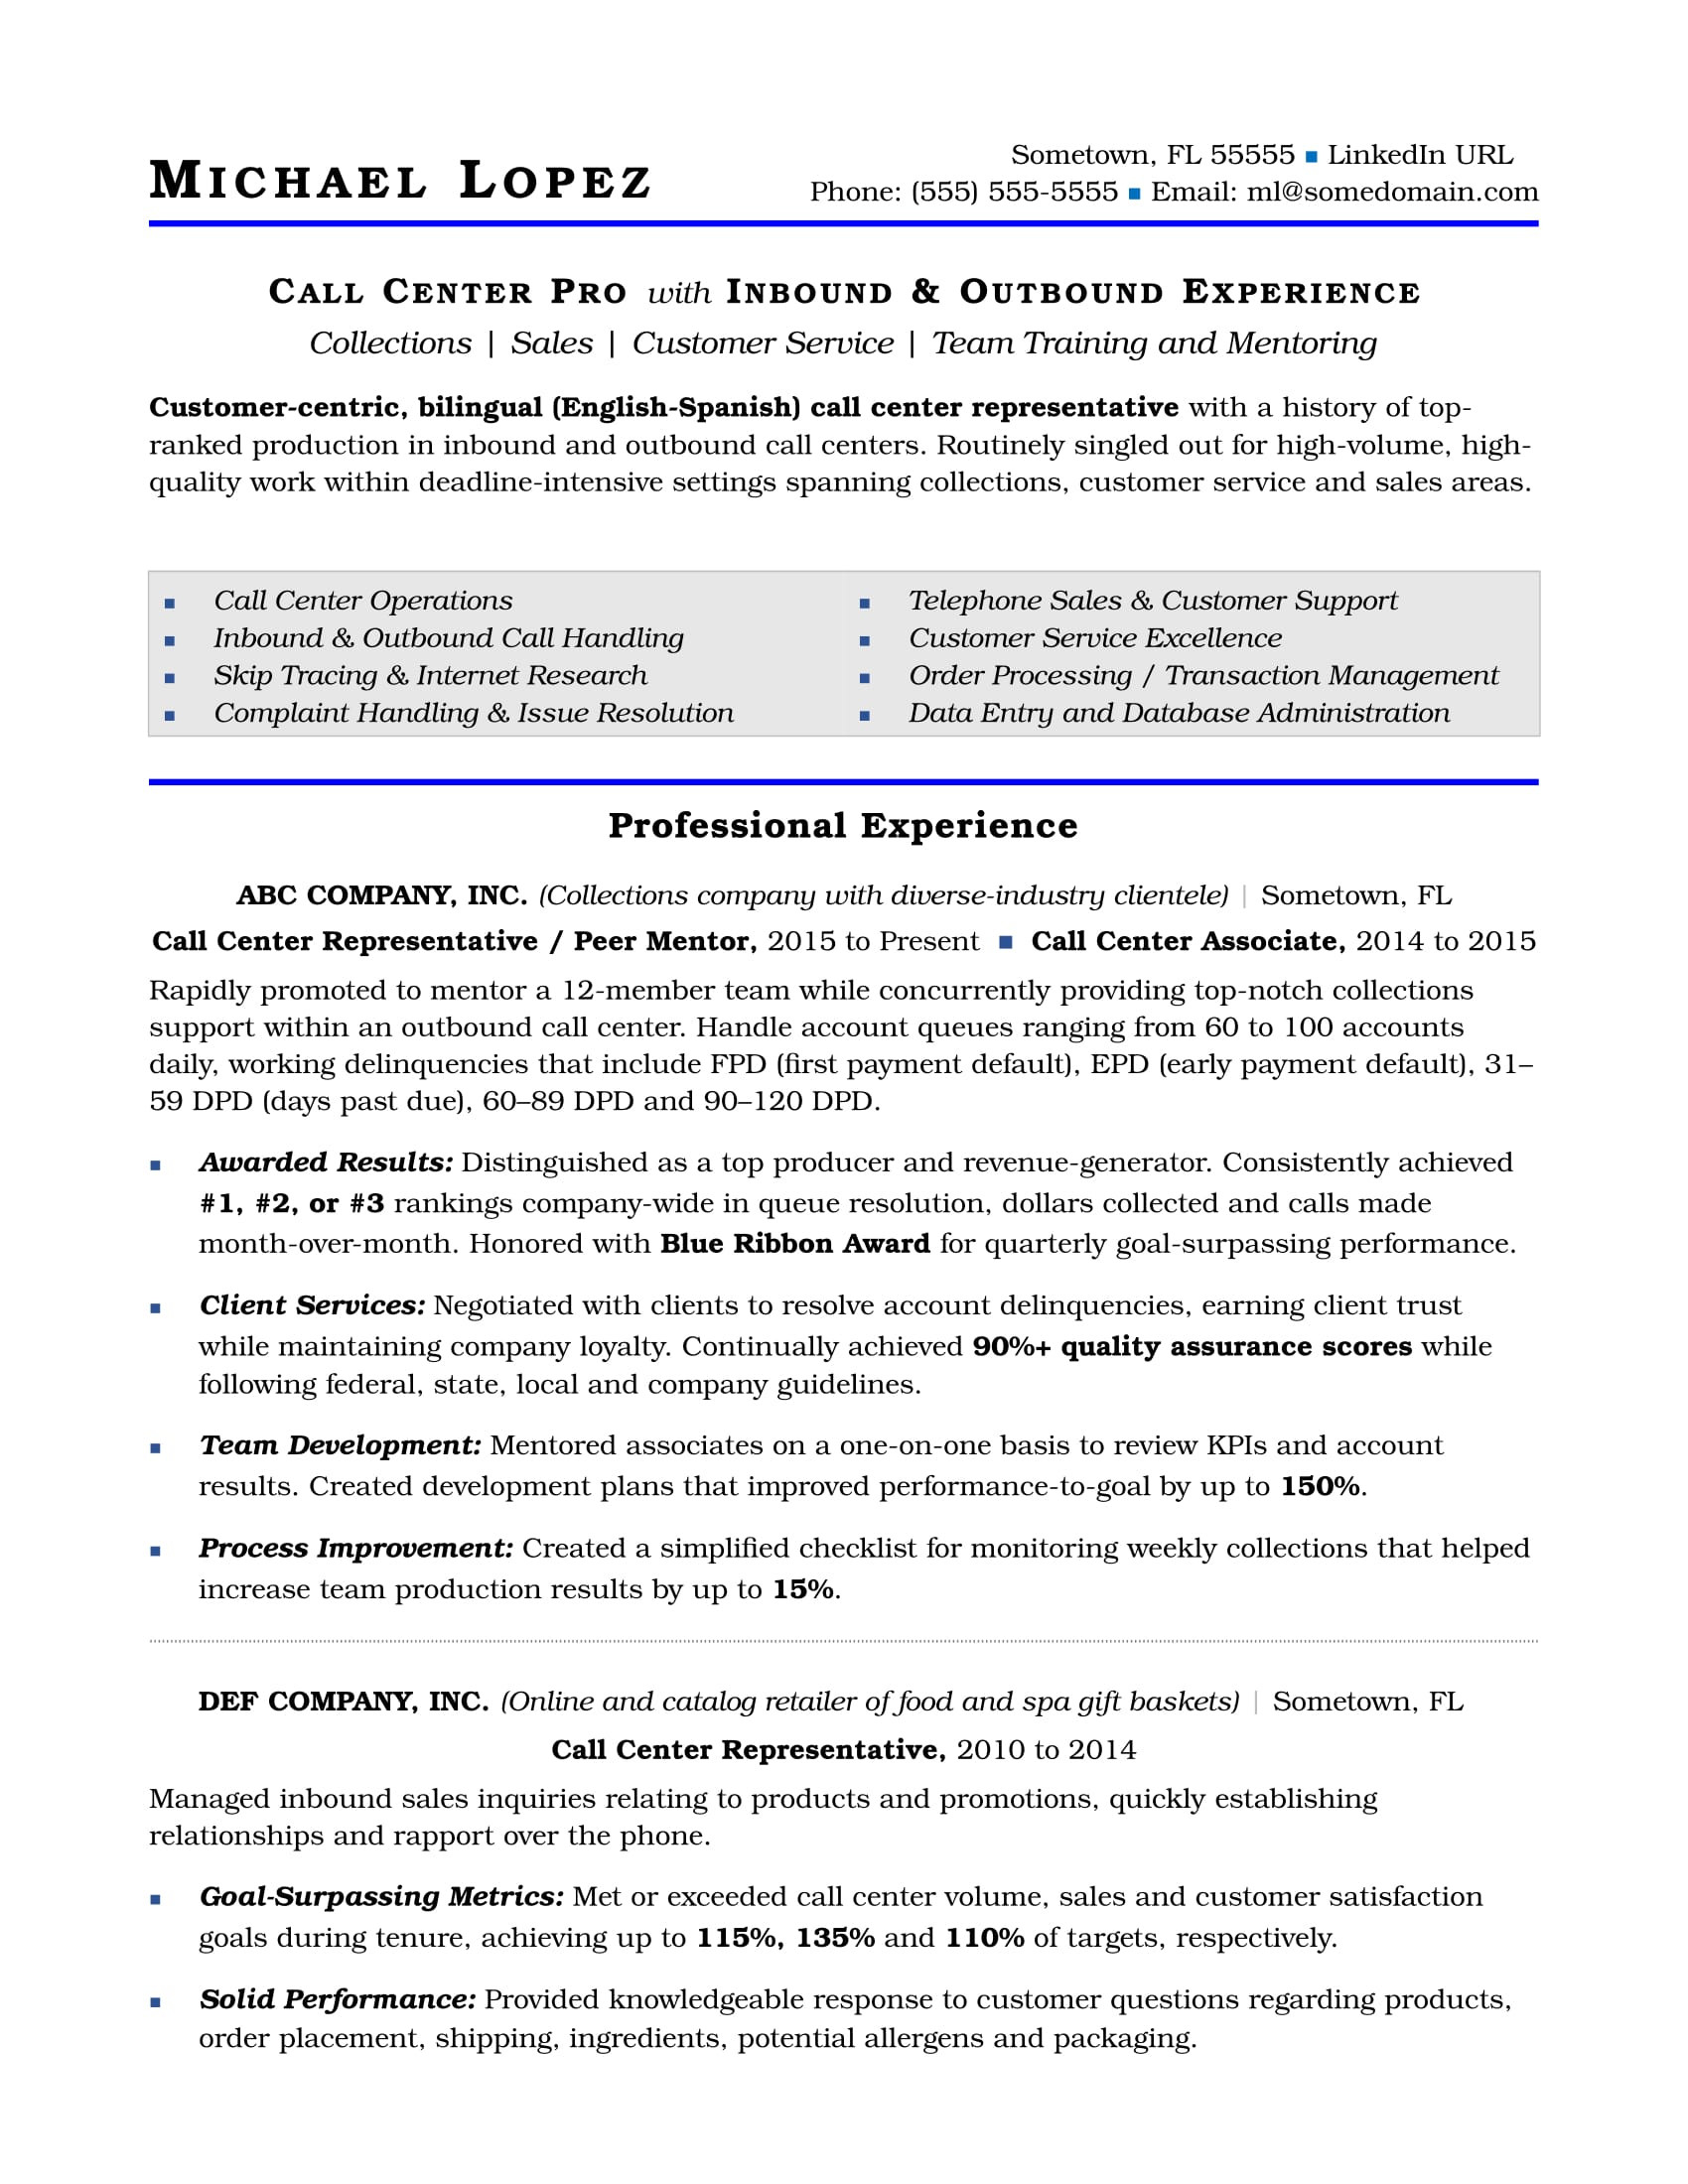 Customer Service Sample Resume for Call Center Call Center Resume Sample Monster.com